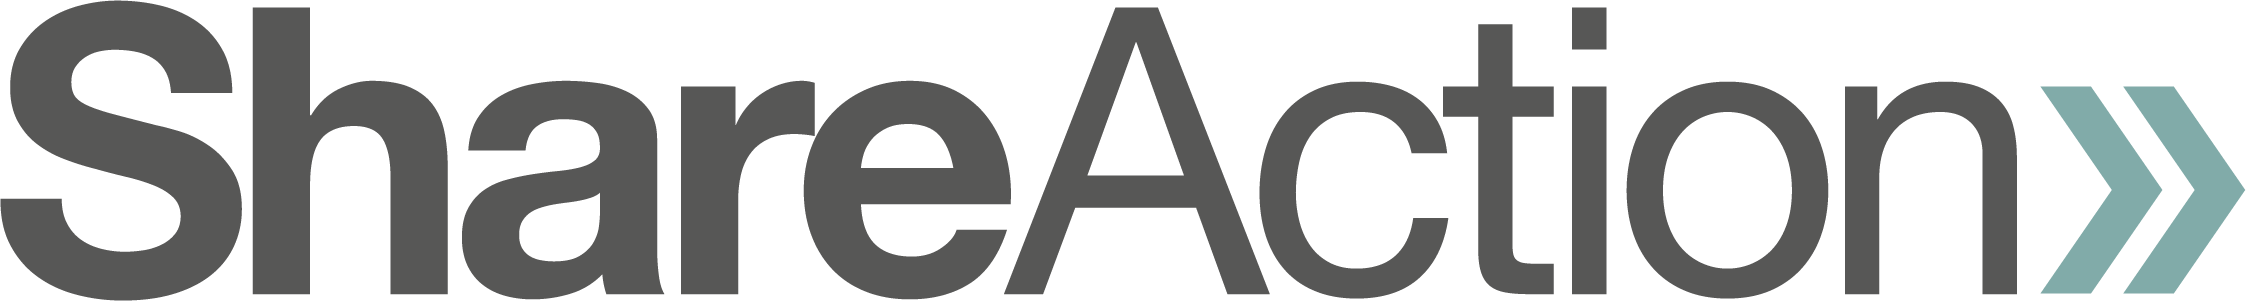 Share Action Logo